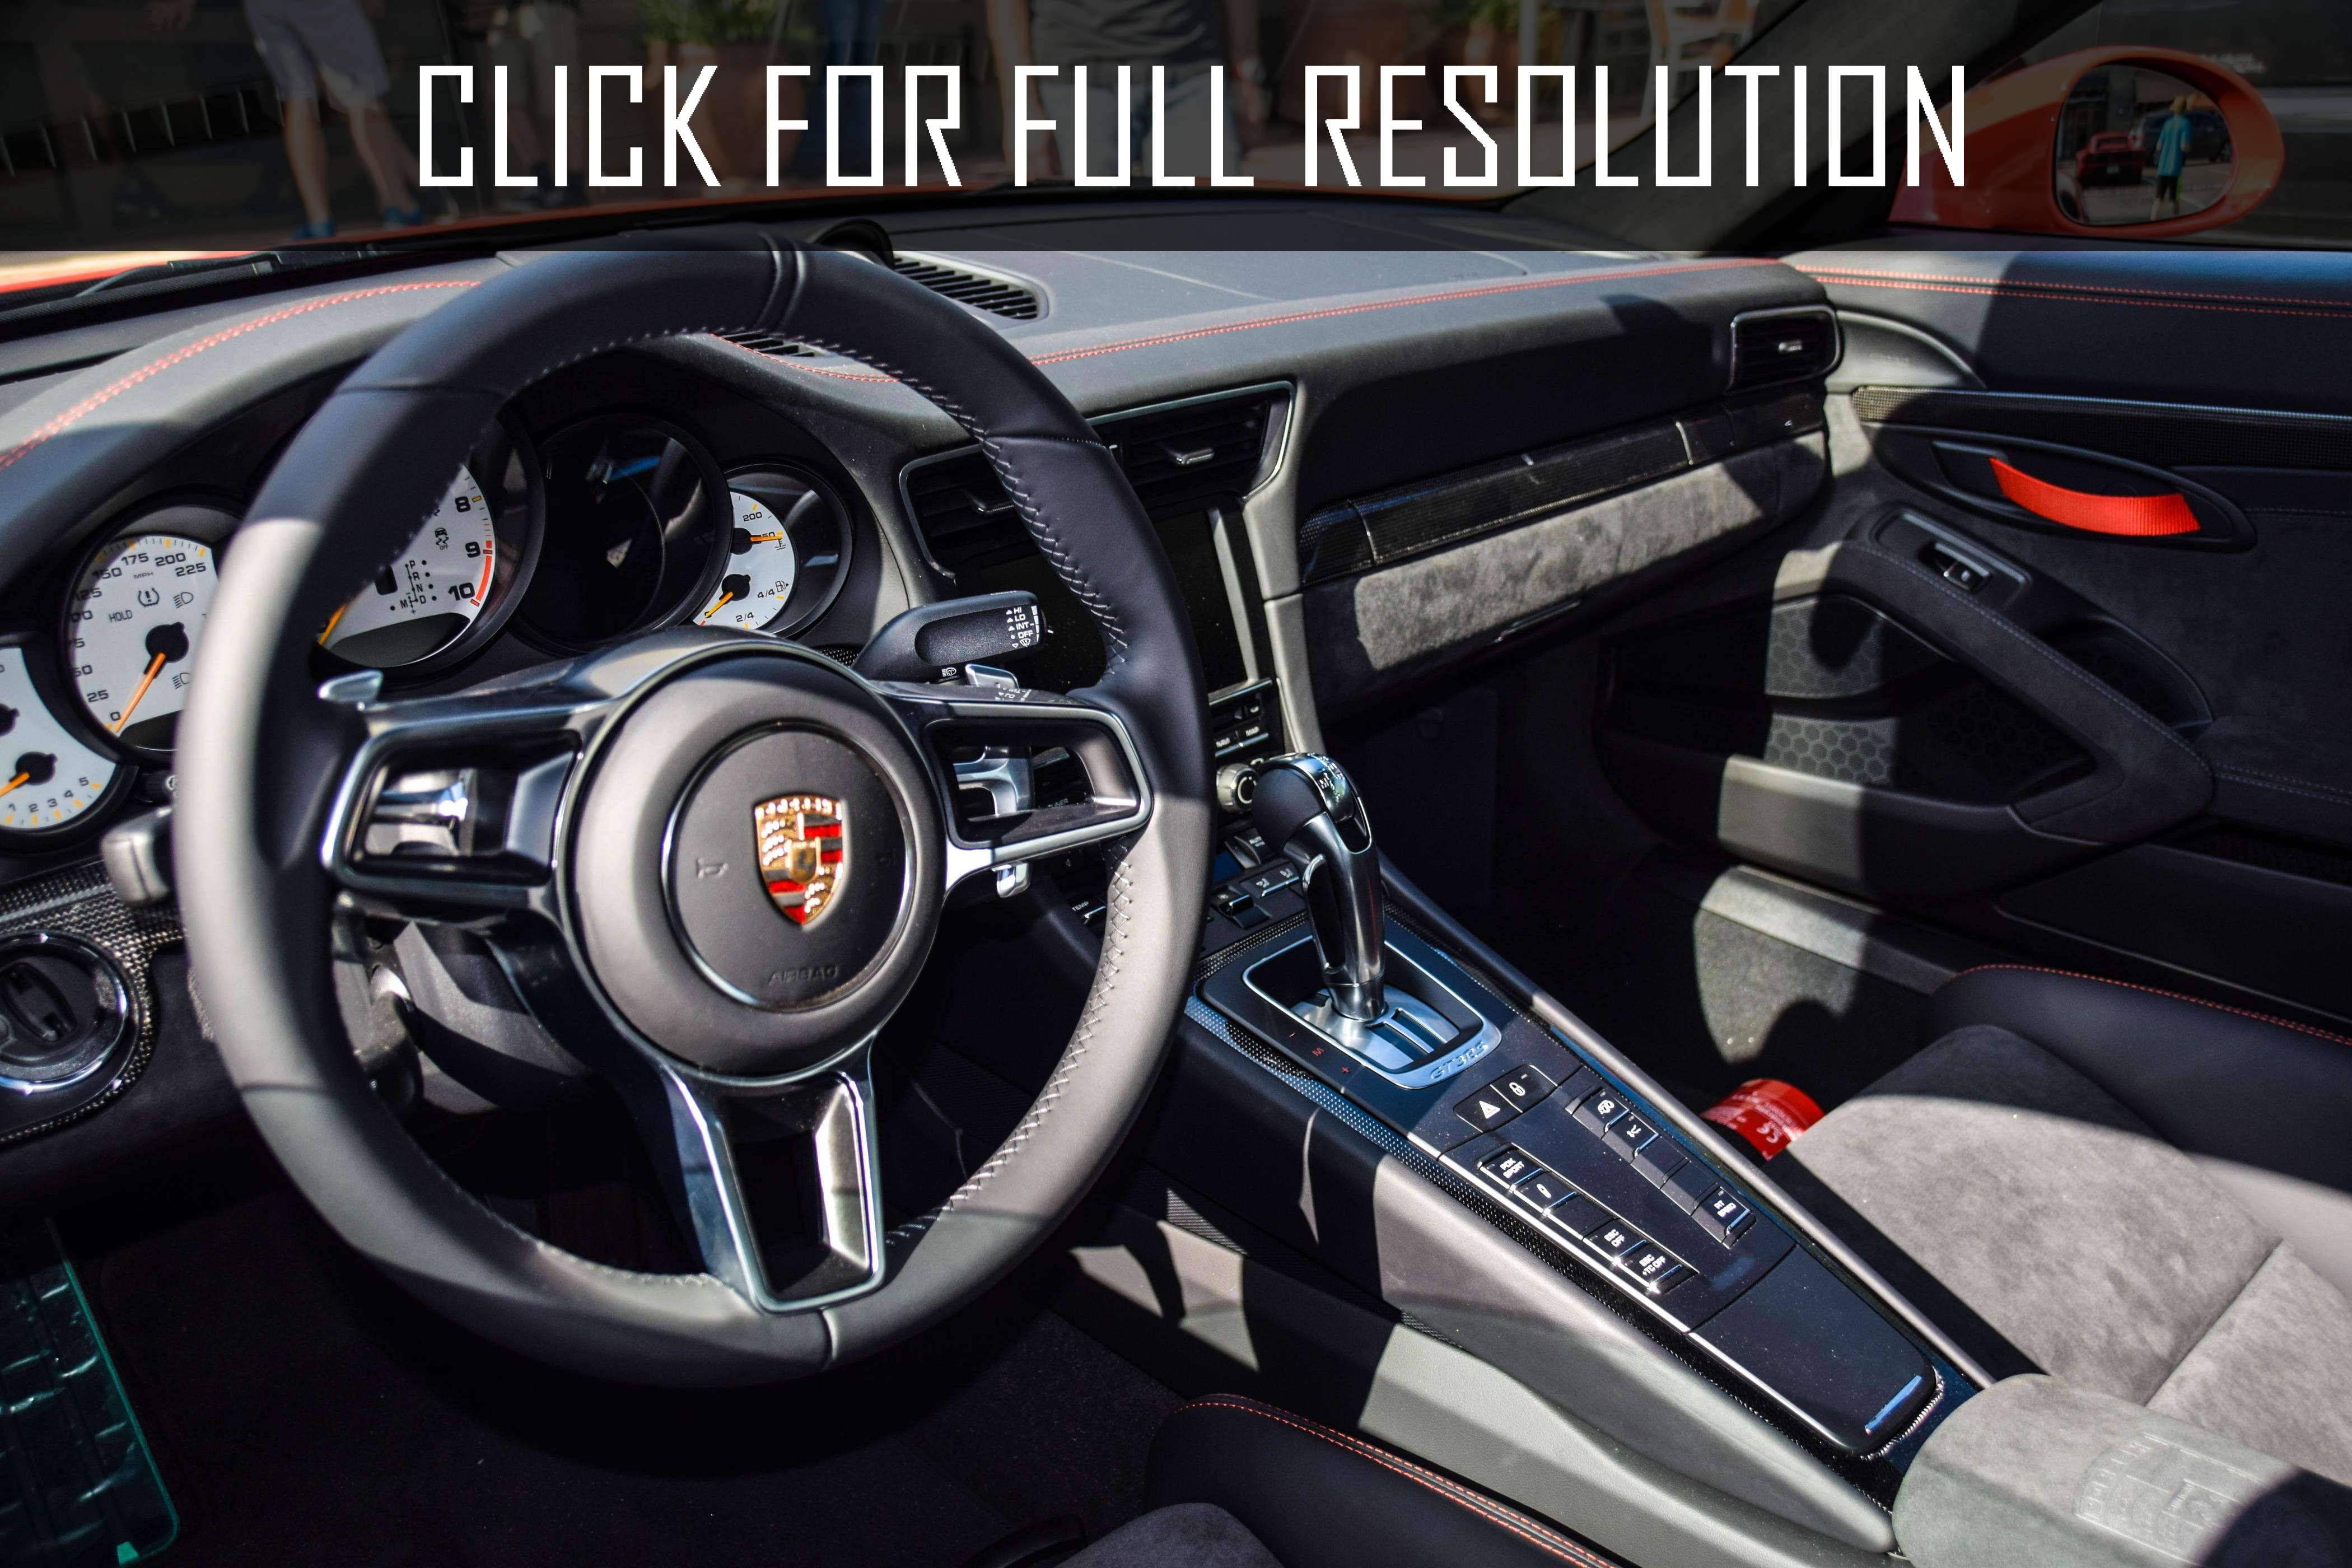 2016 Porsche 911 Gt3 Best Image Gallery 1 22 Share And